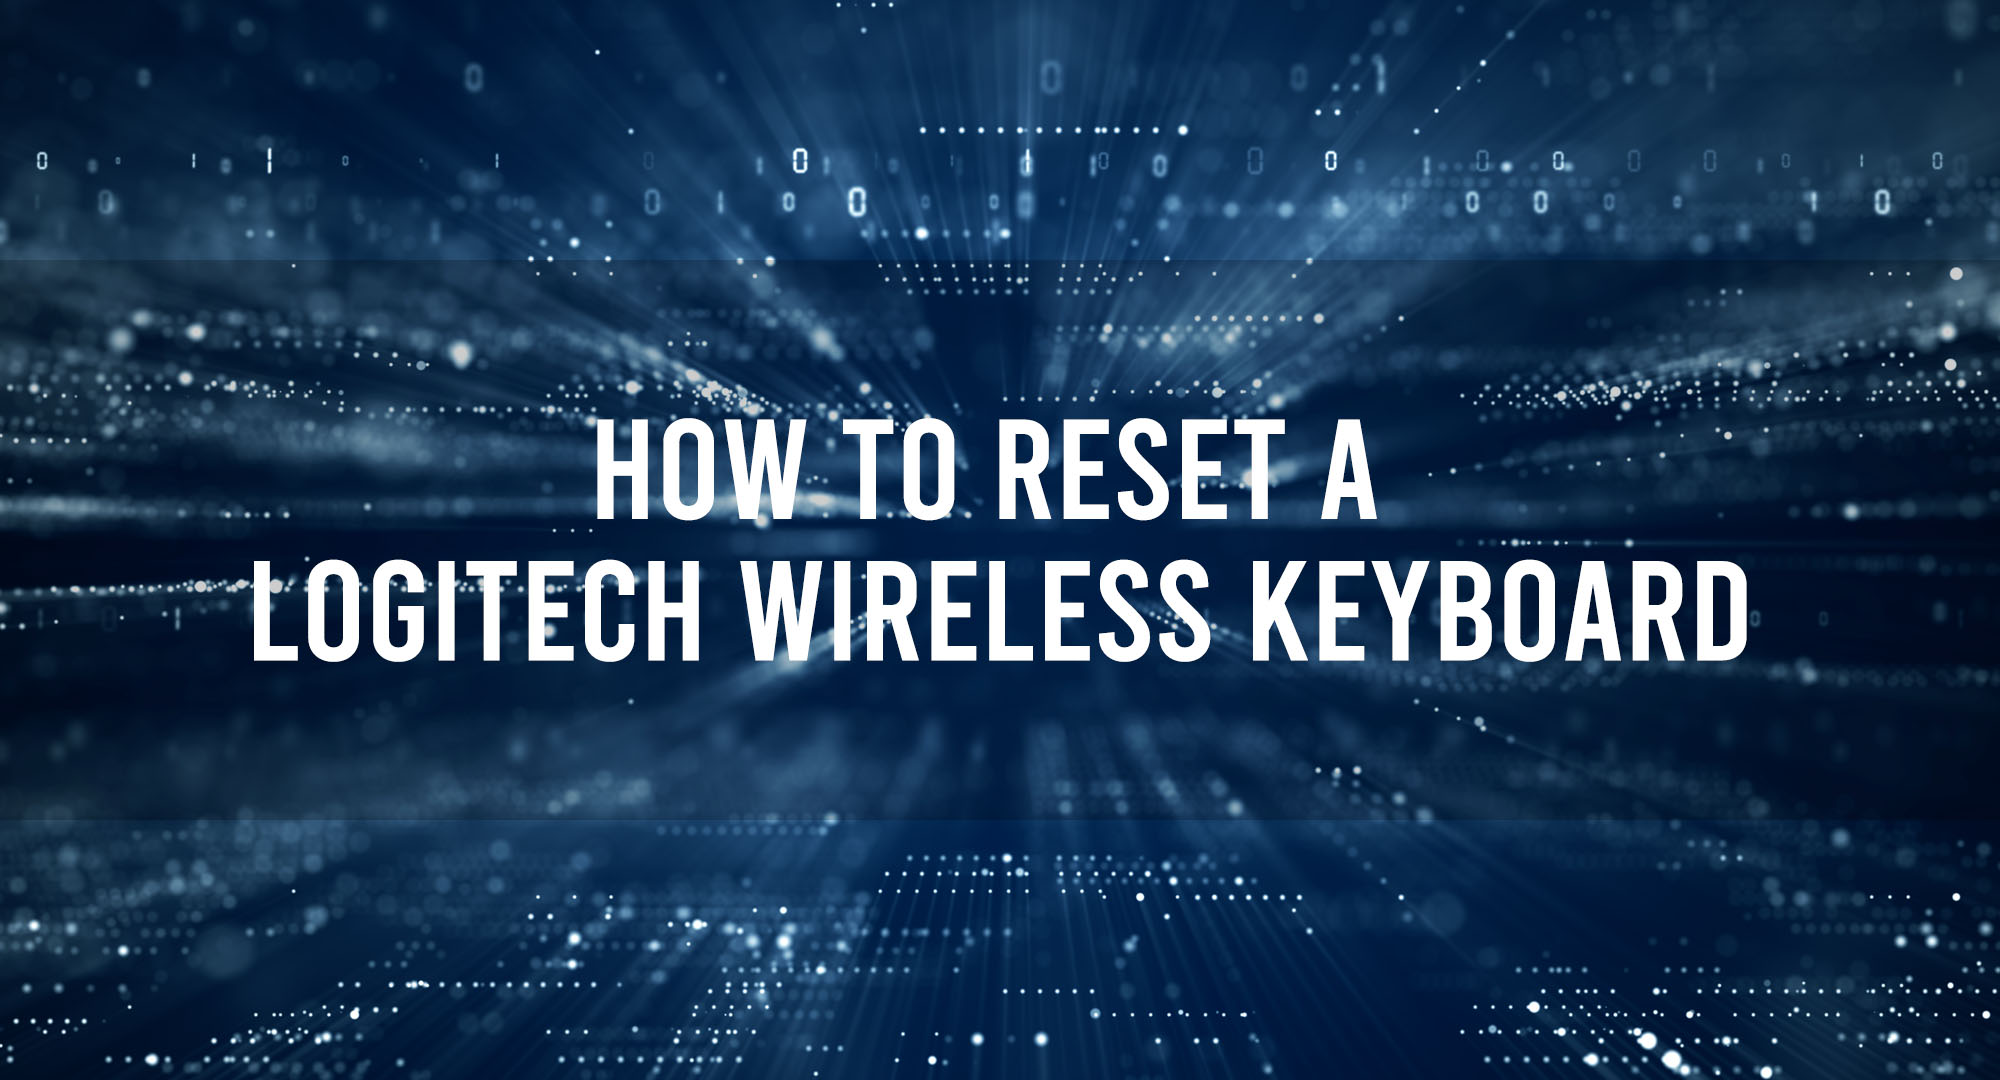 How to reset a logitech wireless keyboard